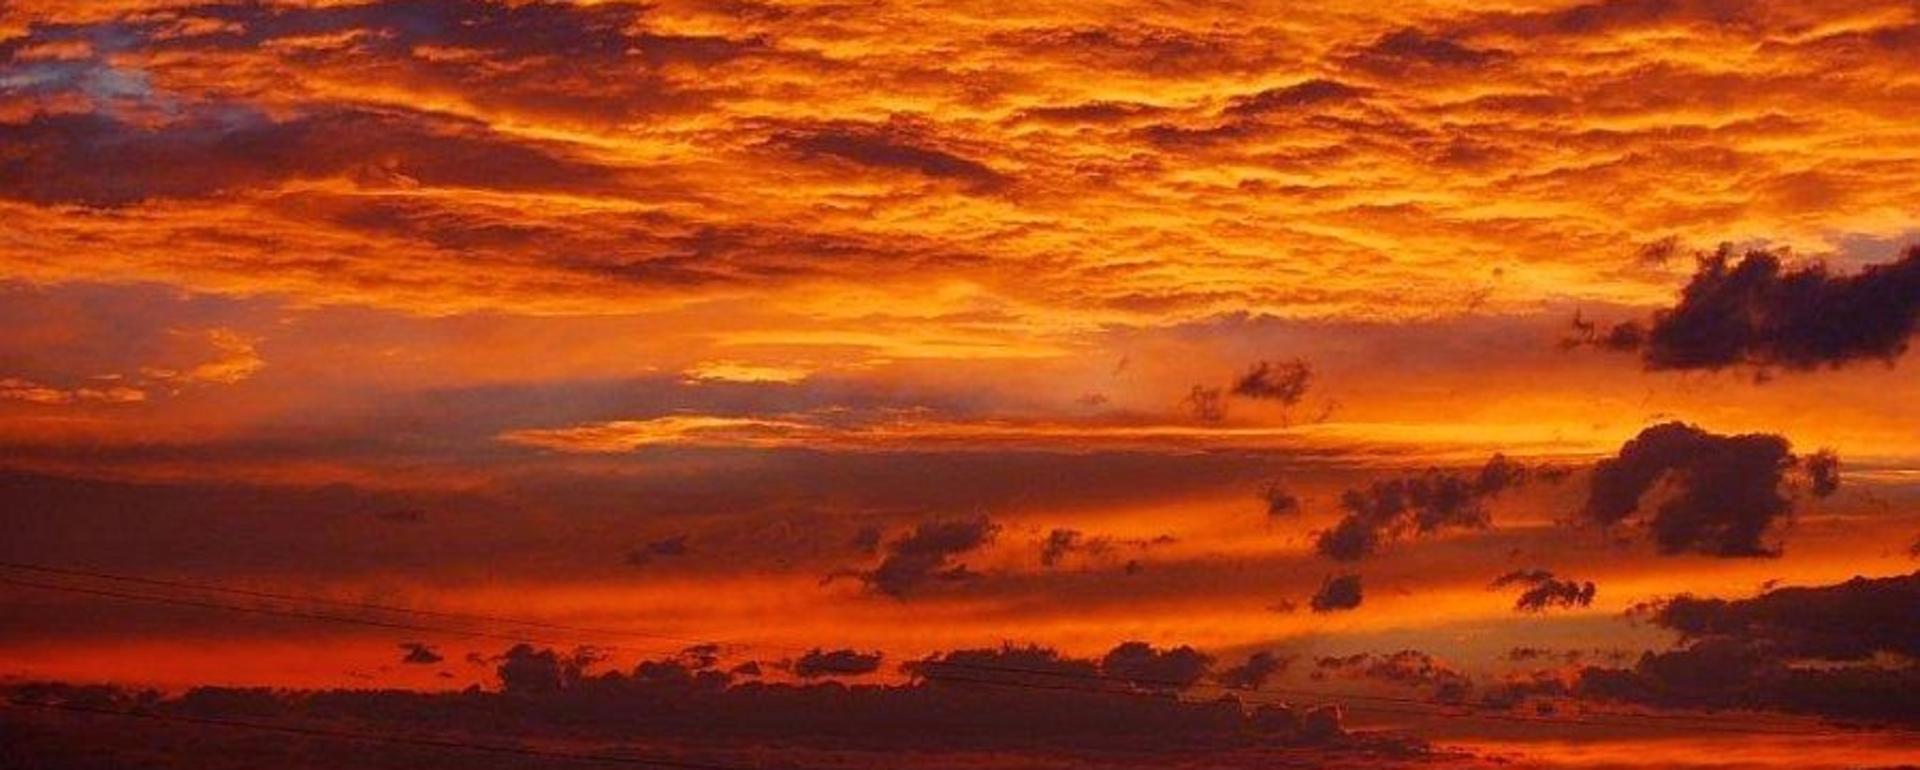 Gallatin Valley sunset by Steve Kelly